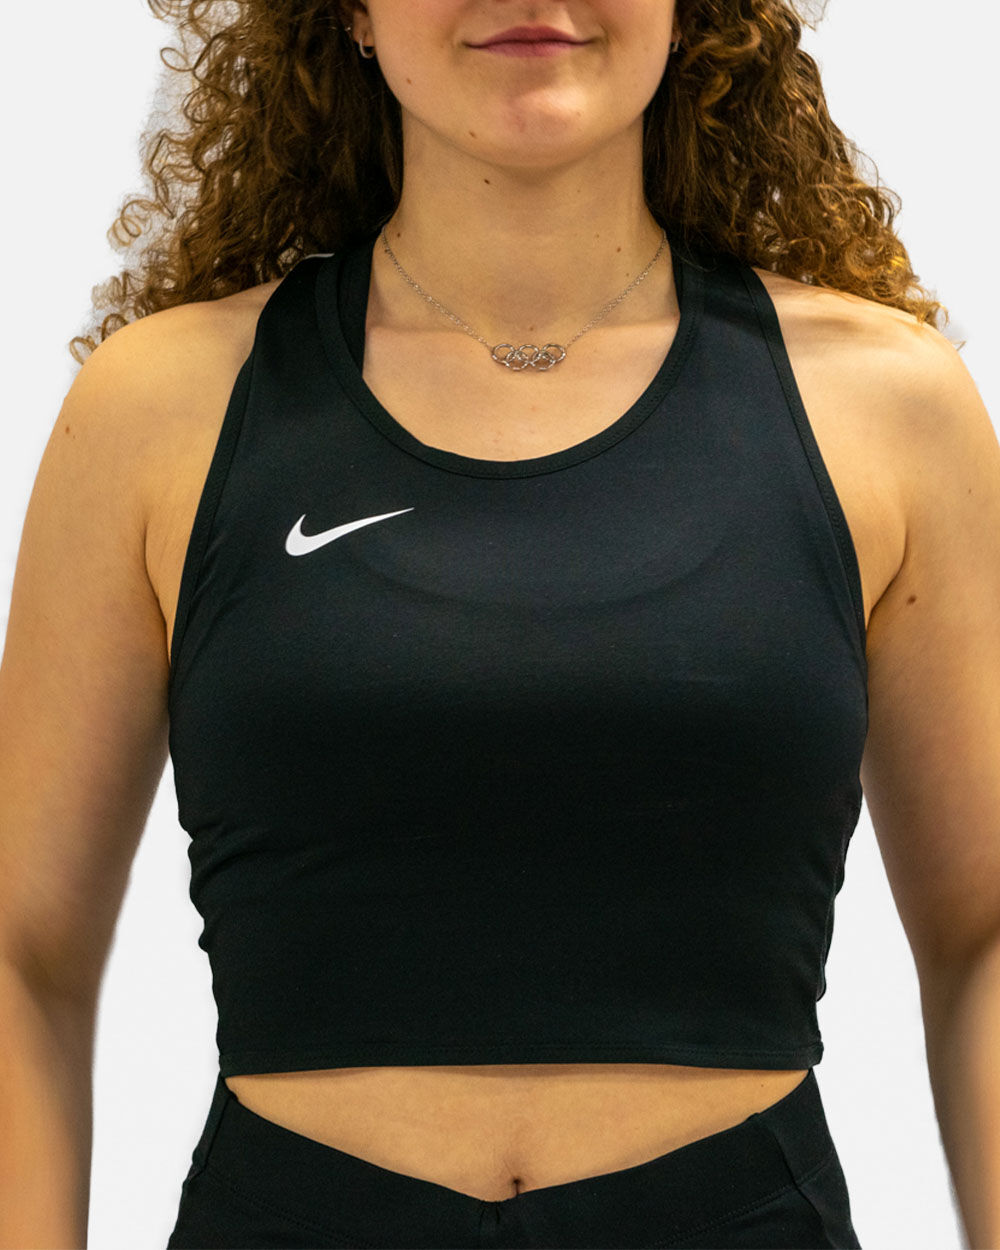 Camiseta sin mangas de running Nike Stock Negro Mujeres - NT0312-010